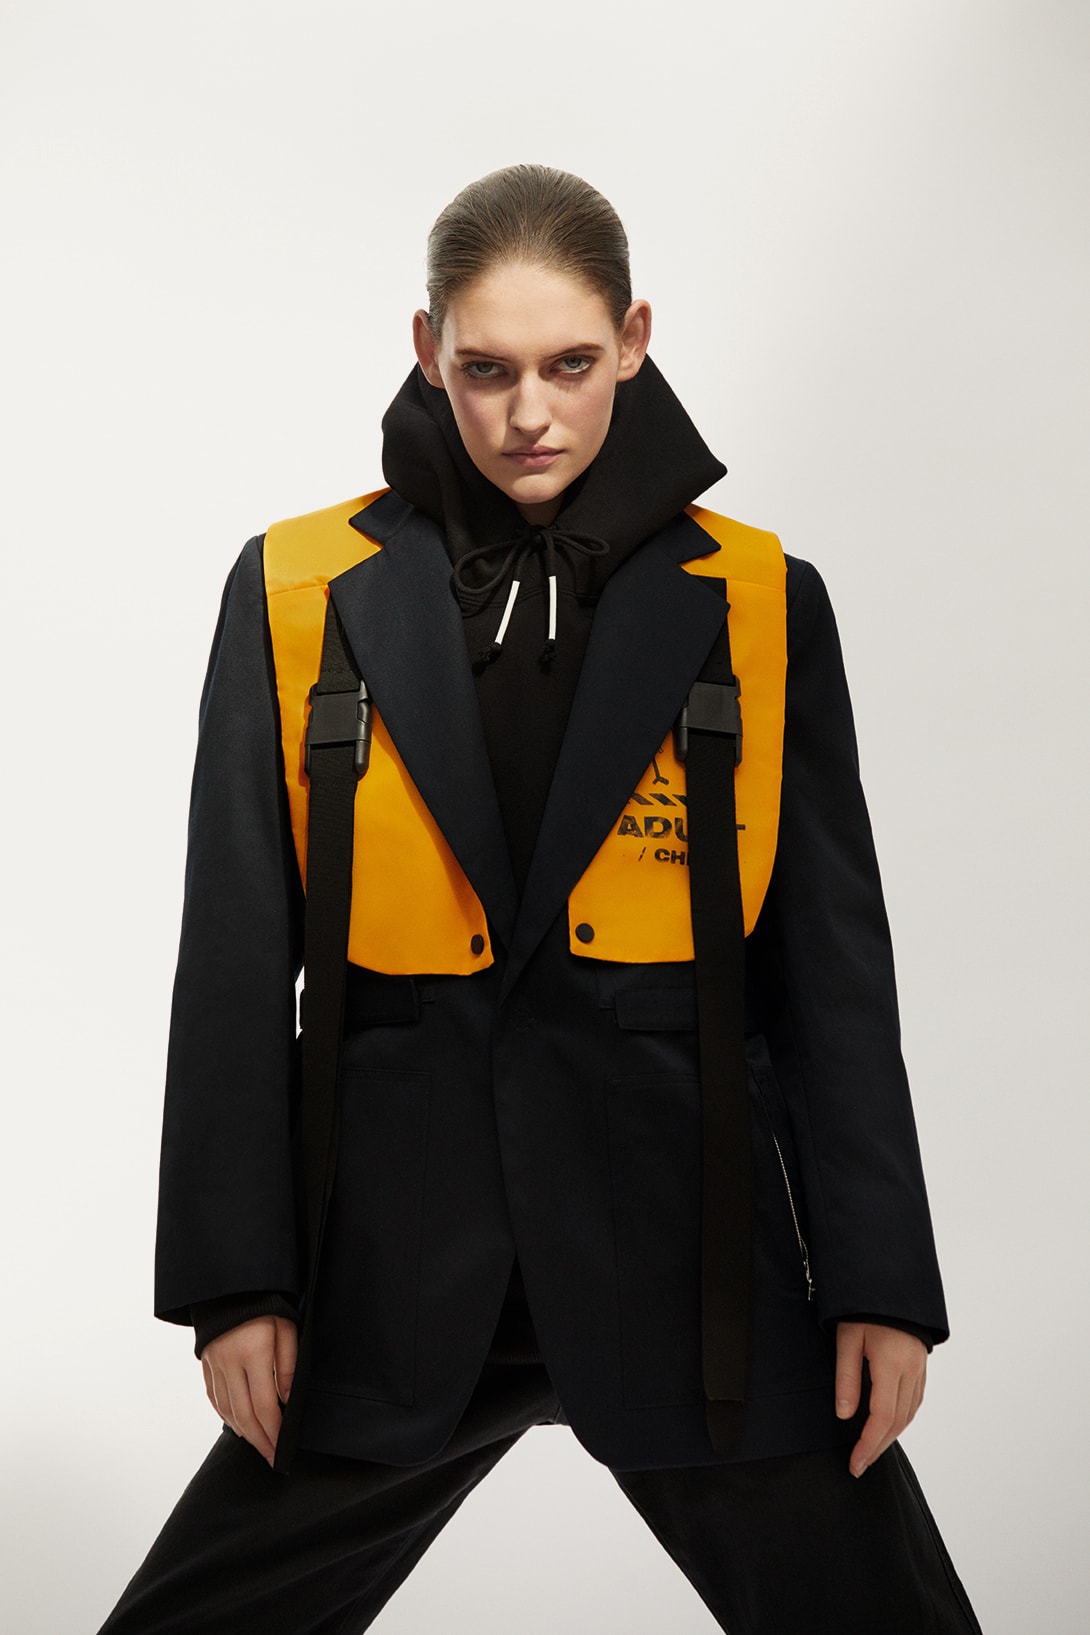 ZDDZ Fall/Winter 2018 Lookbook Collection life vests streetwear fashion